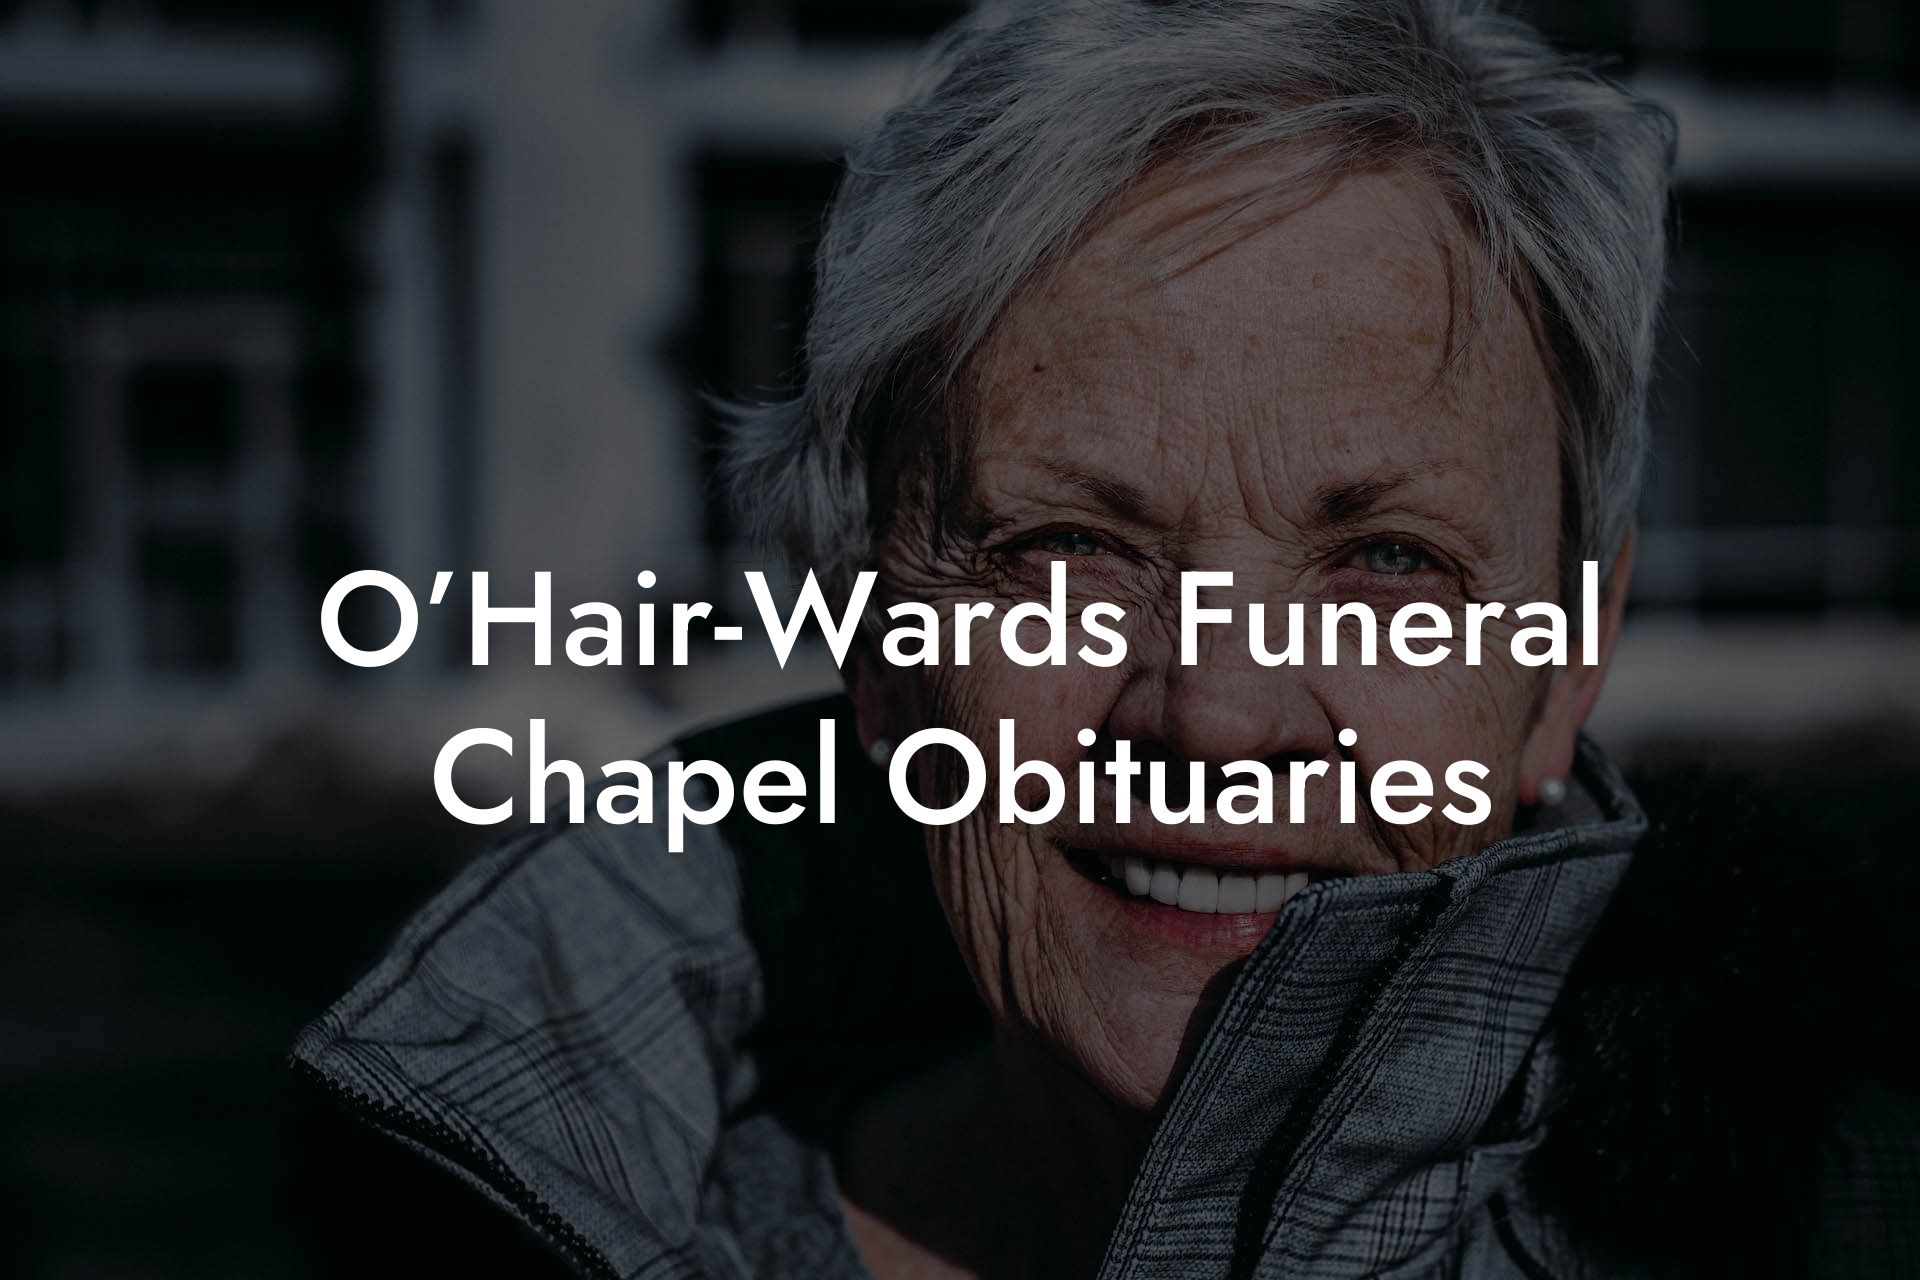 O’Hair-Wards Funeral Chapel Obituaries